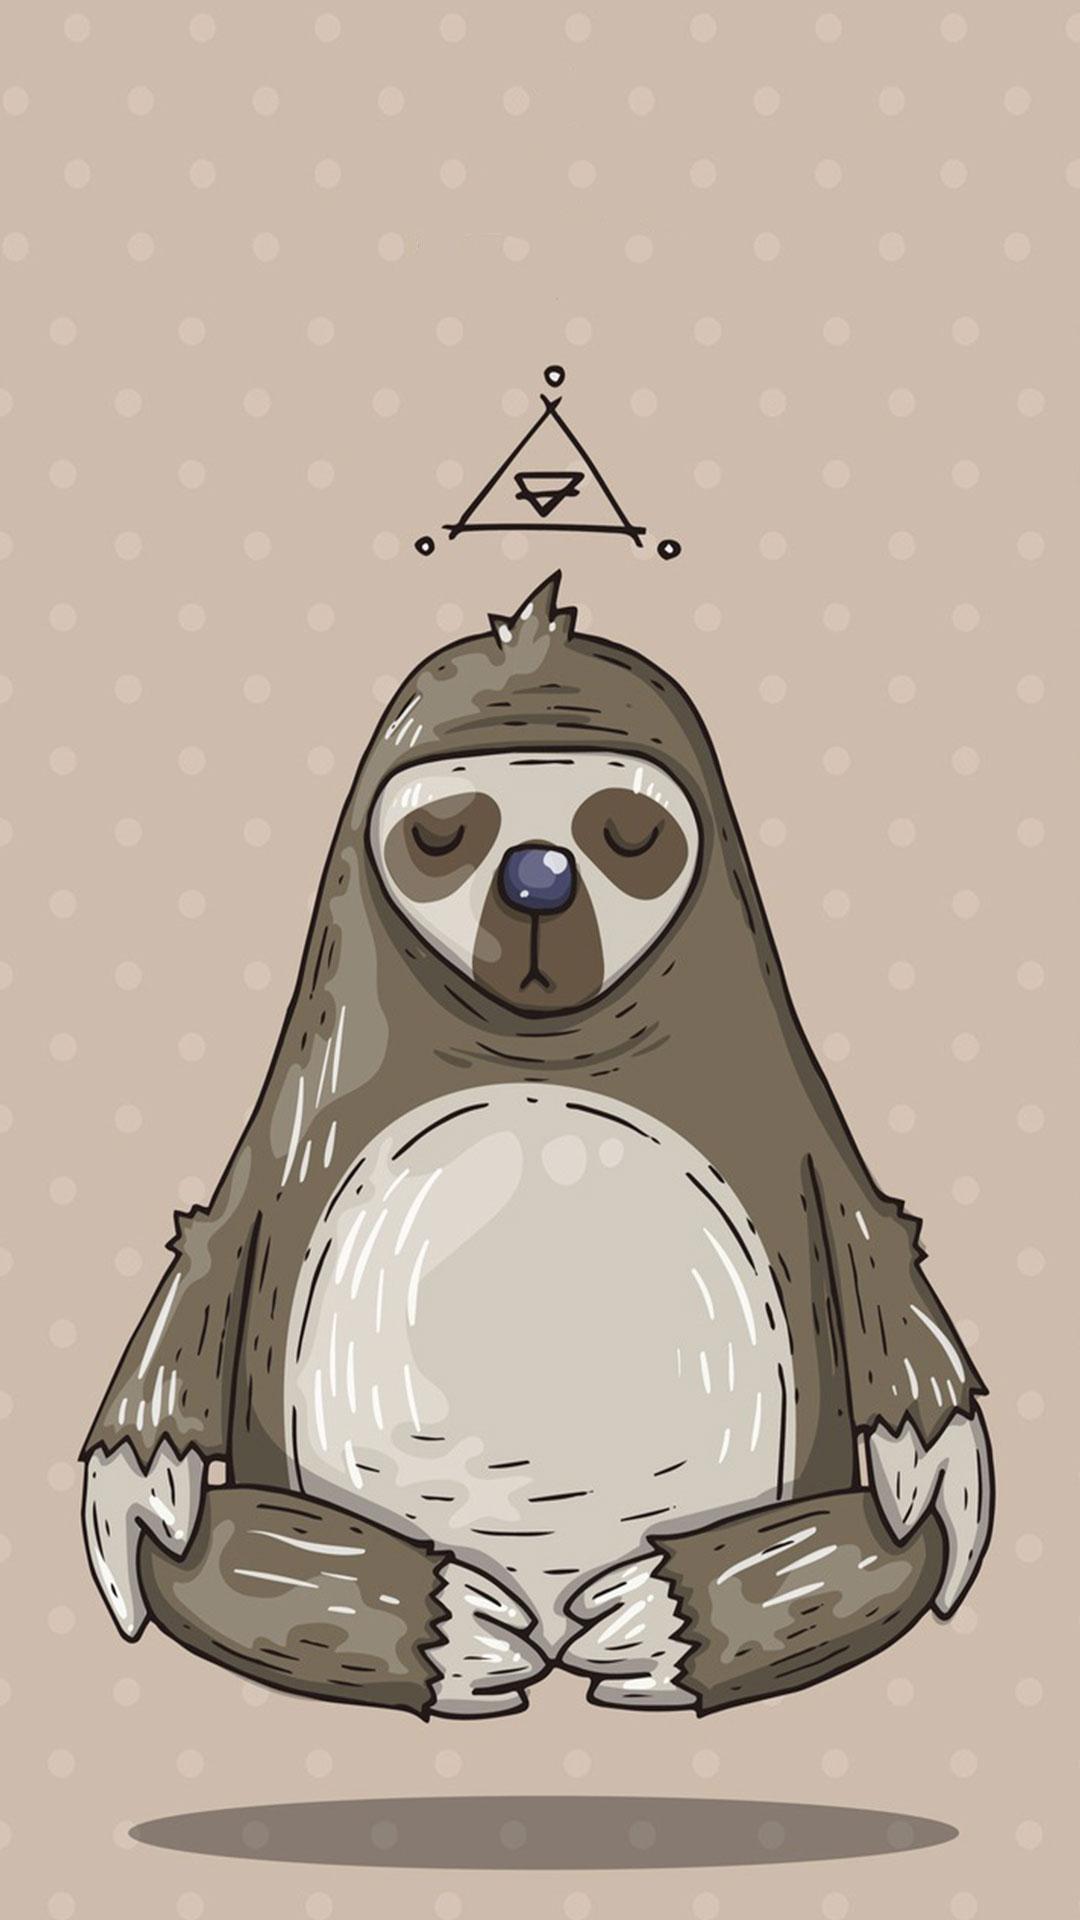 sloth iphone wallpaper